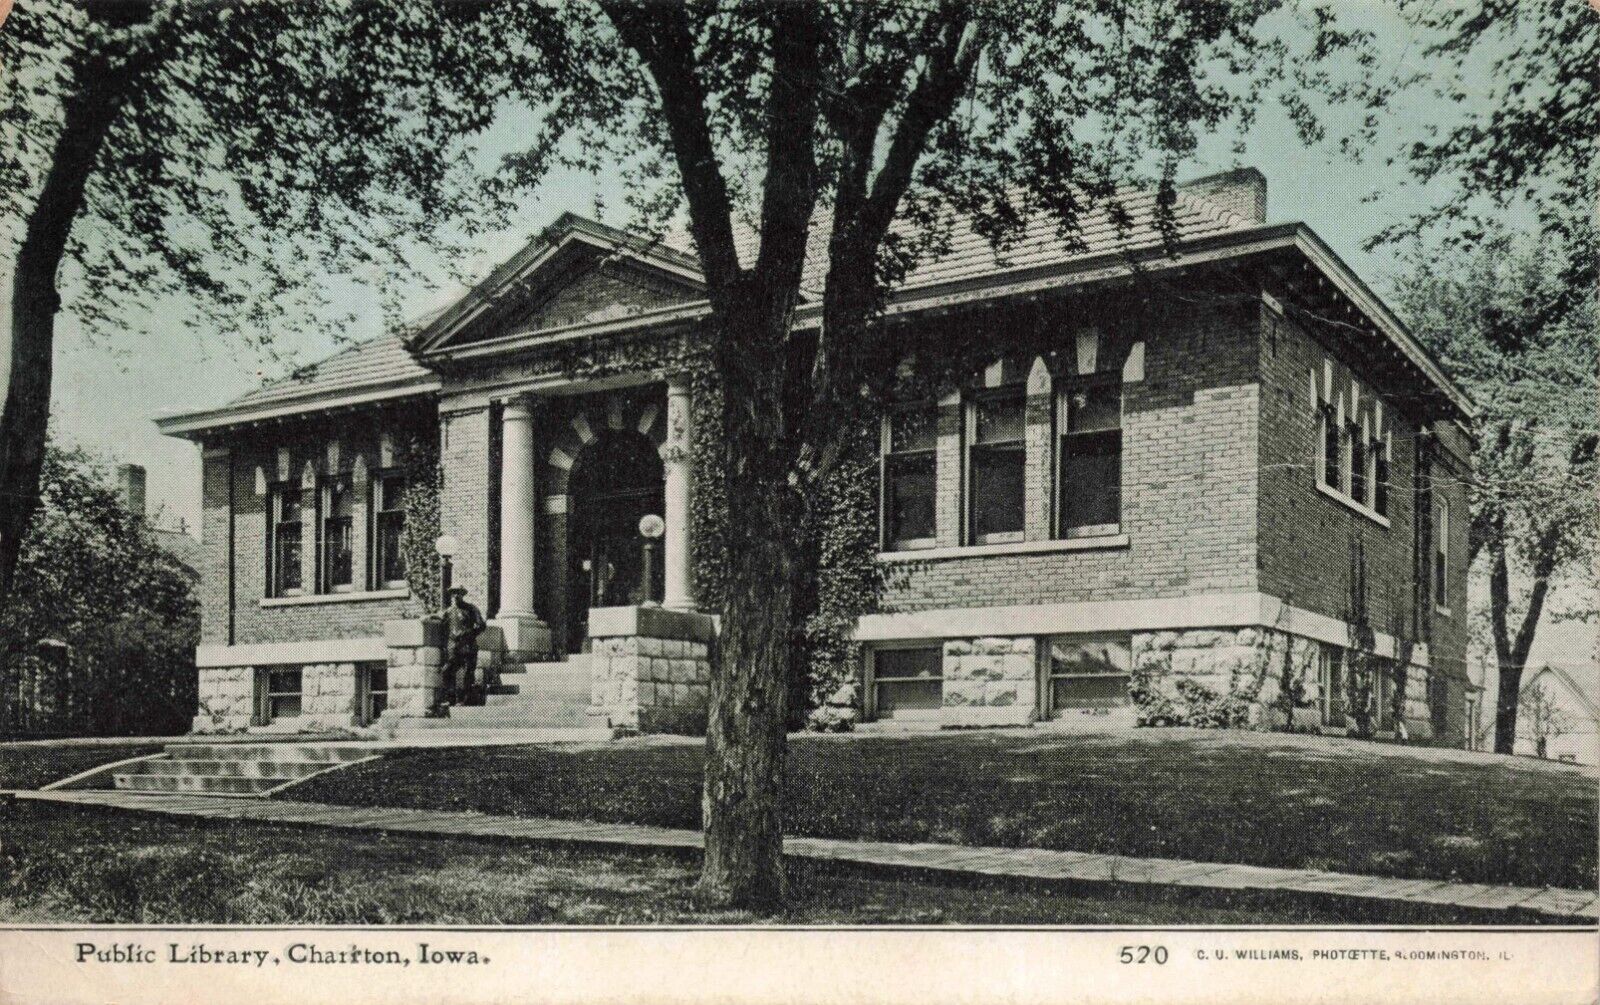 Chariton Iowa Public Library 1908 Lucas County Card #520 by CU Williams Postcard